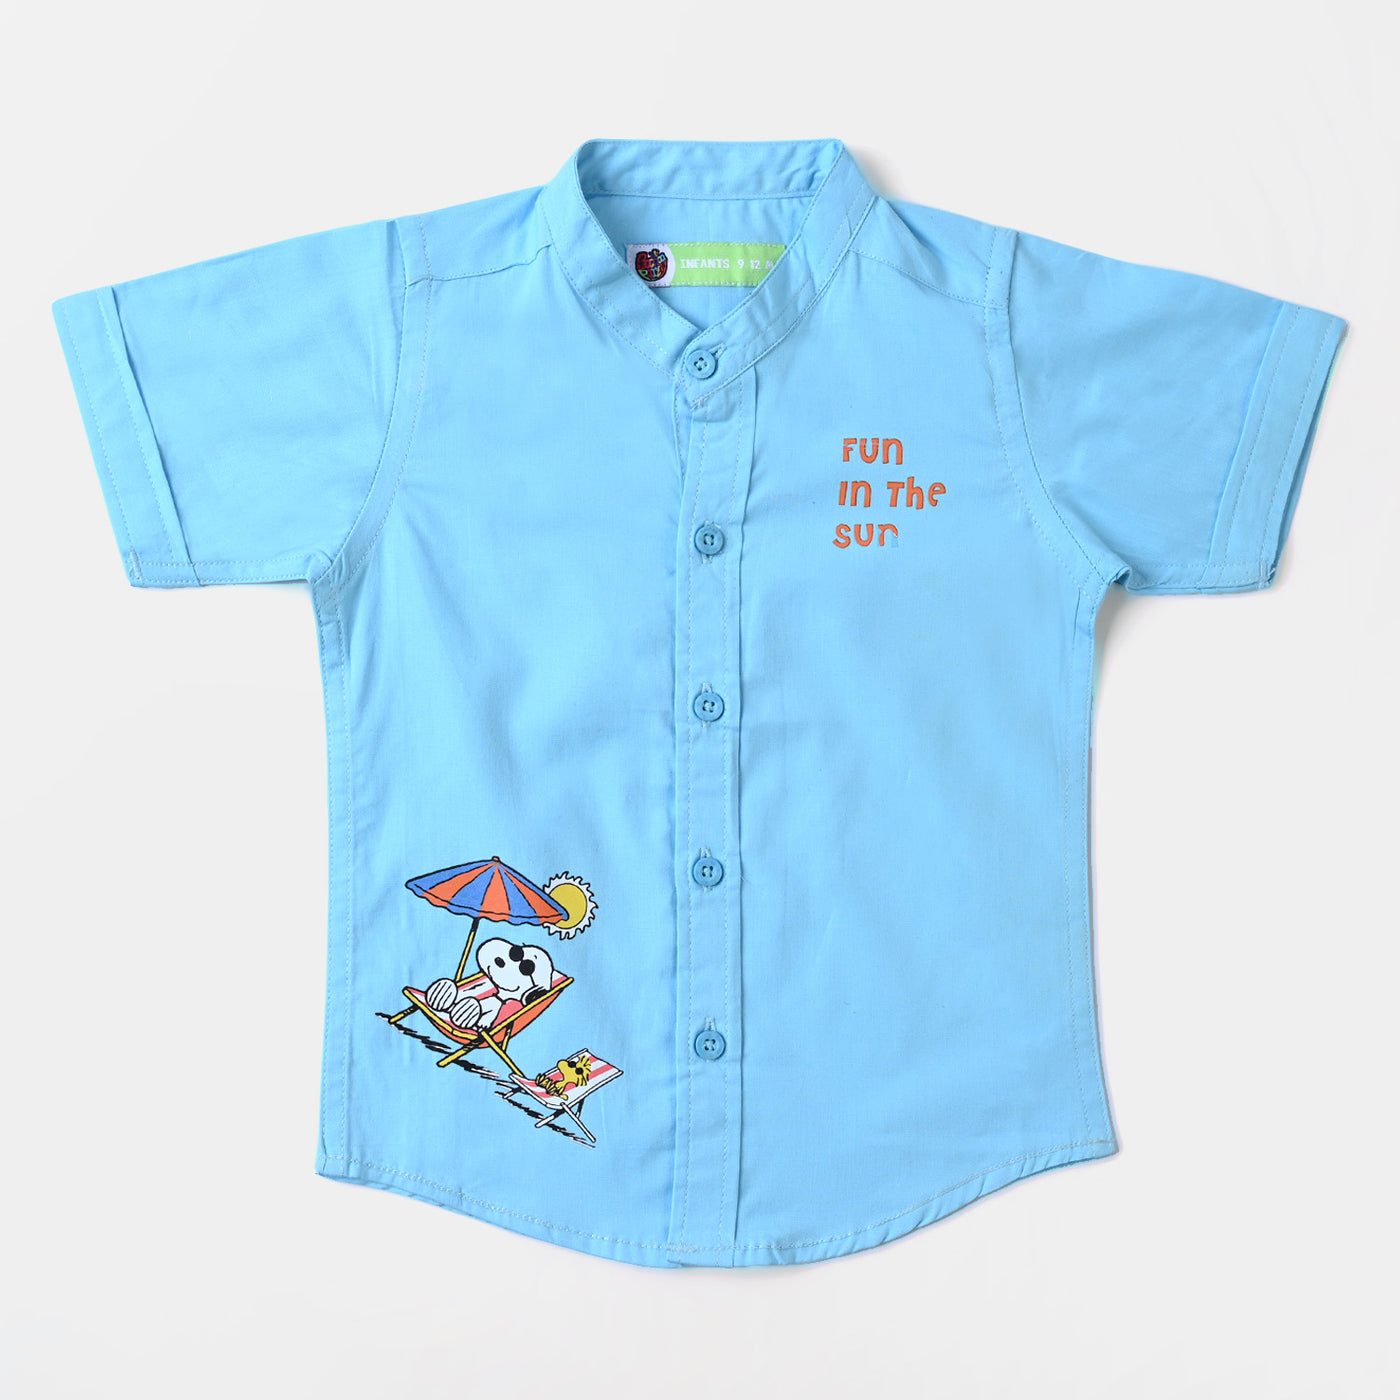 Infant Boys Cotton Casual Shirt Fun In The Sun - Blue